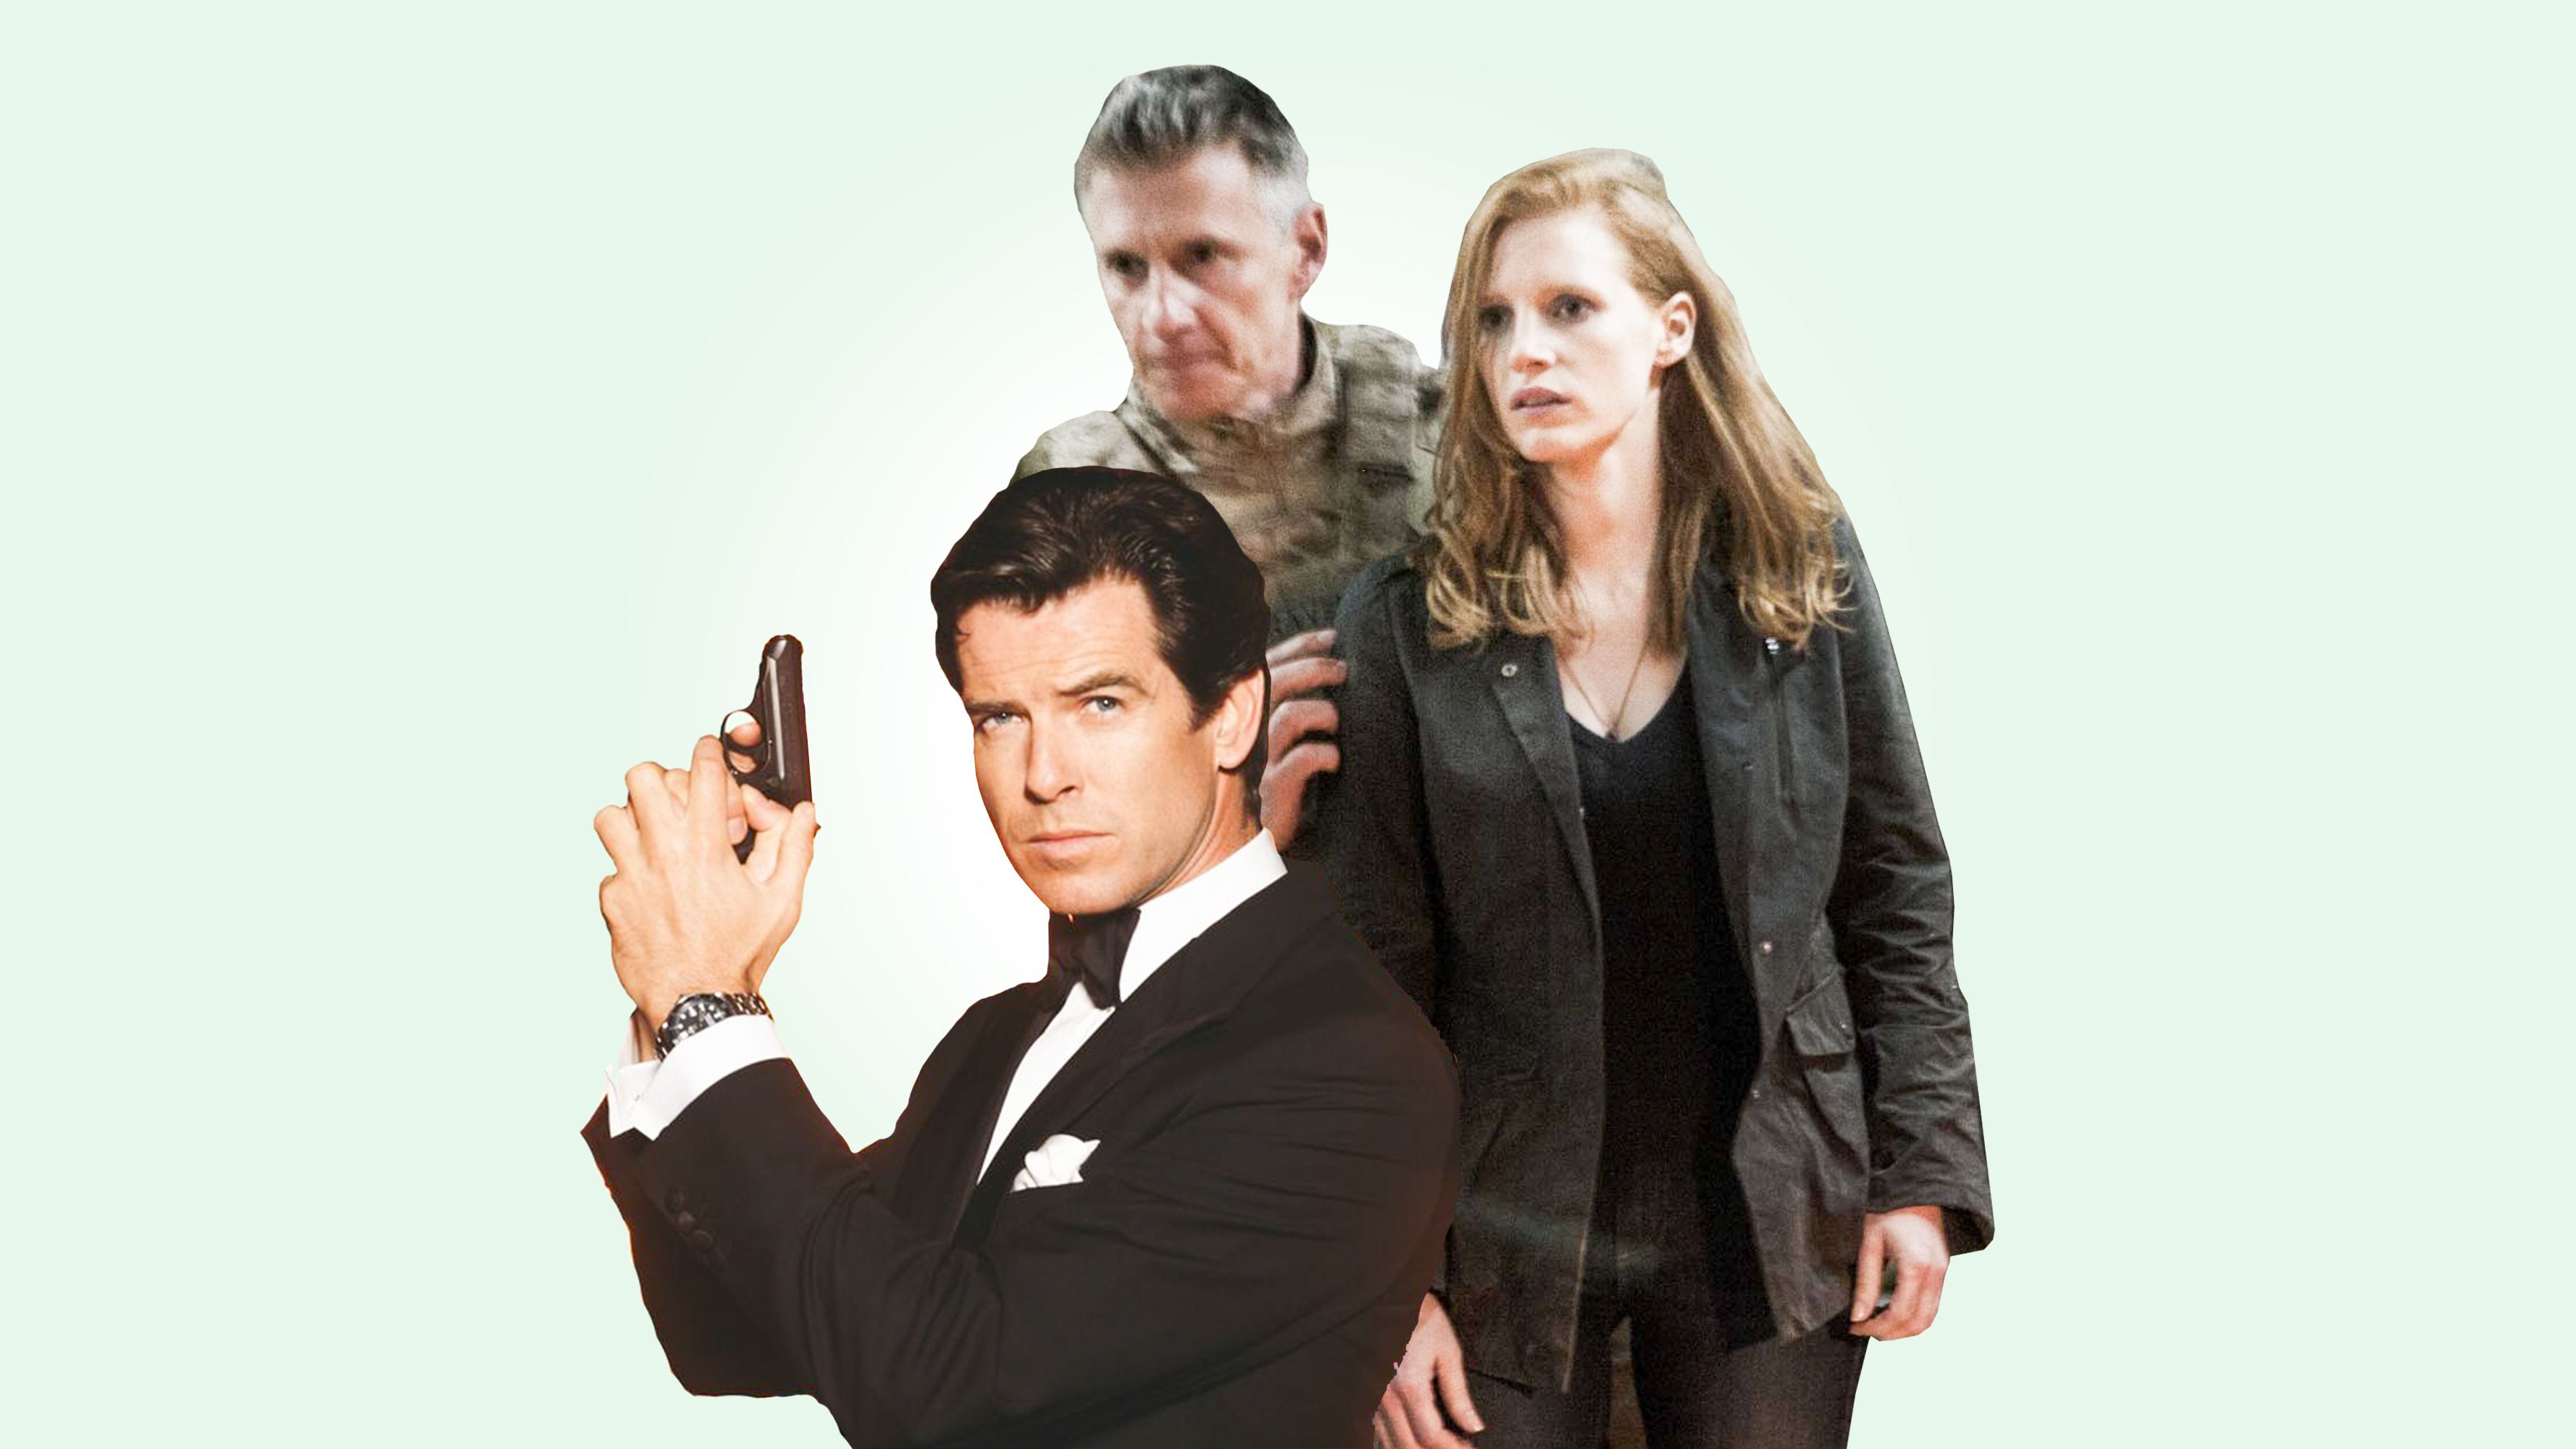 The Spy on Netflix: Is The Spy based on a true story?